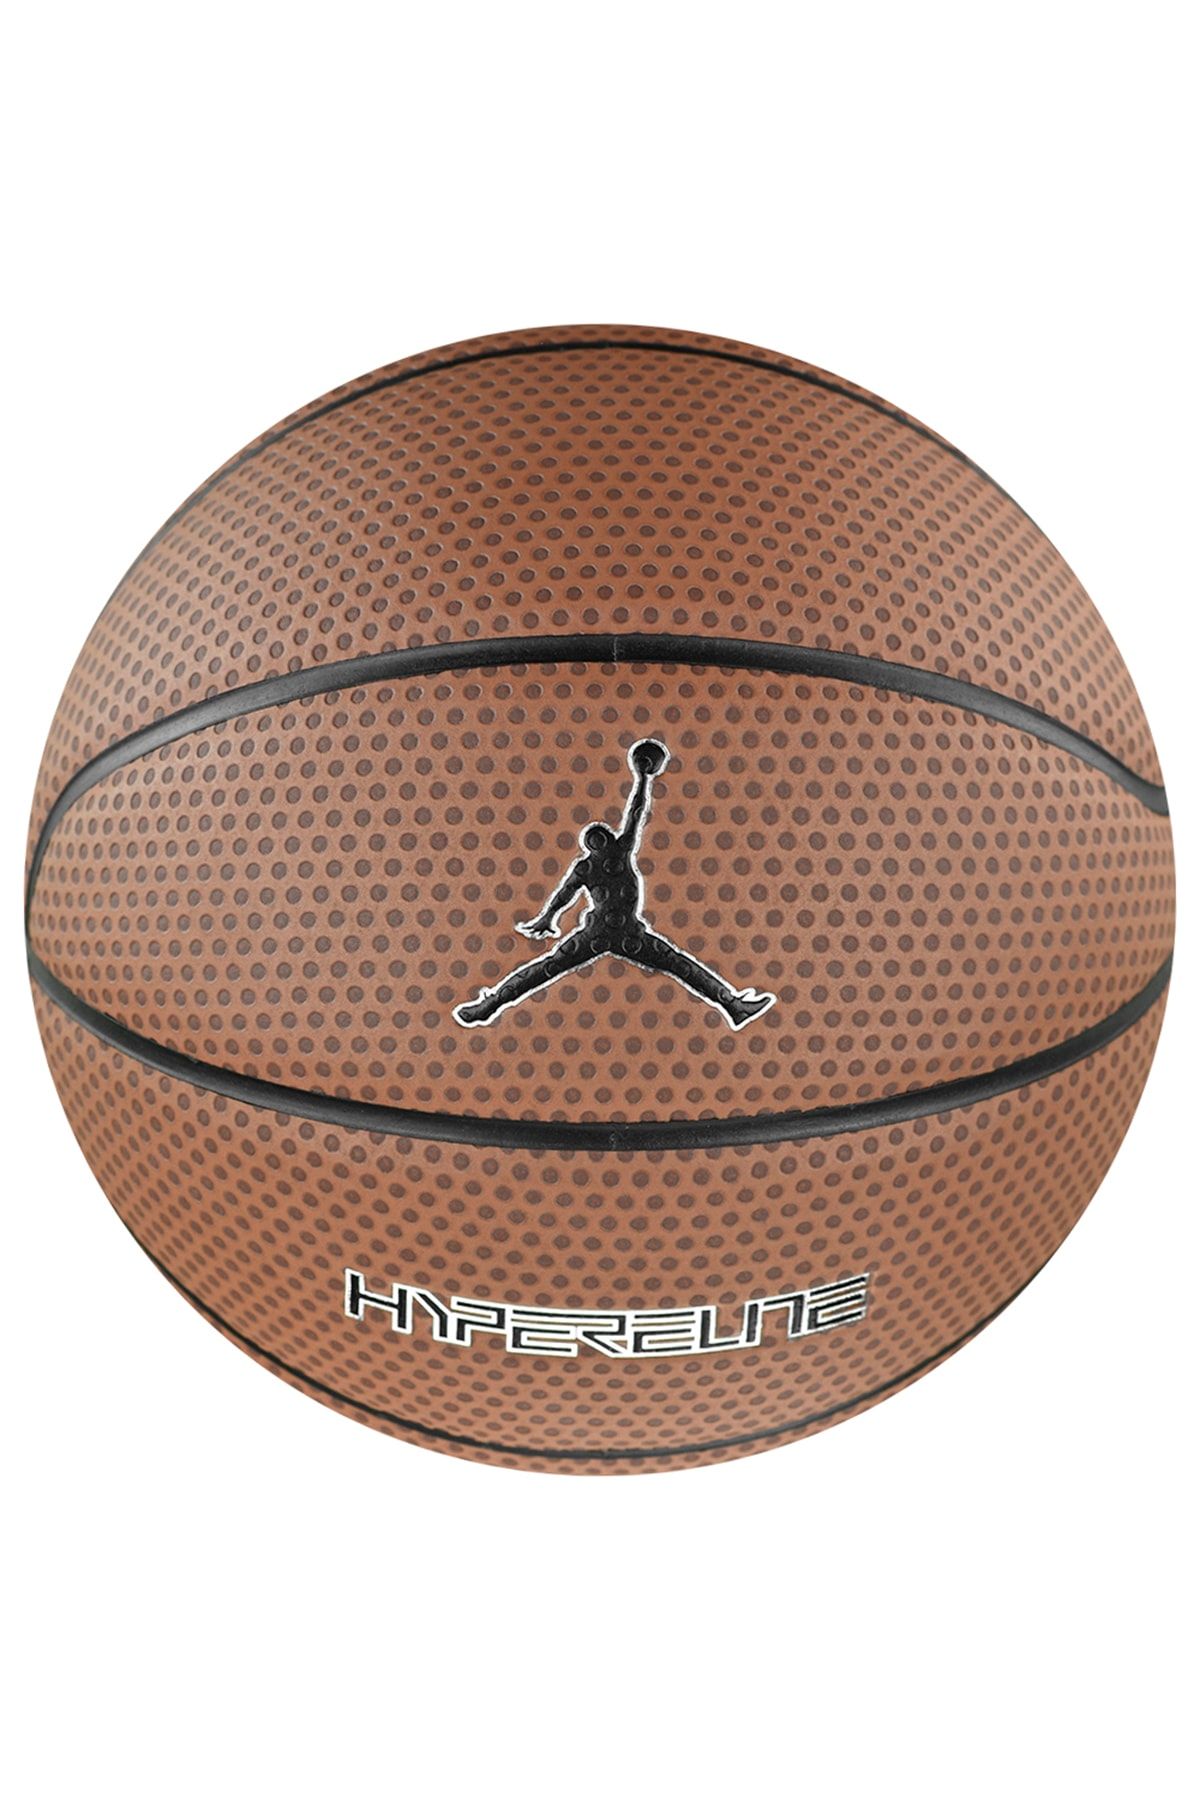 JORDAN JKI00-858 Hyper Elite 8P 7 No Basketbol Topu